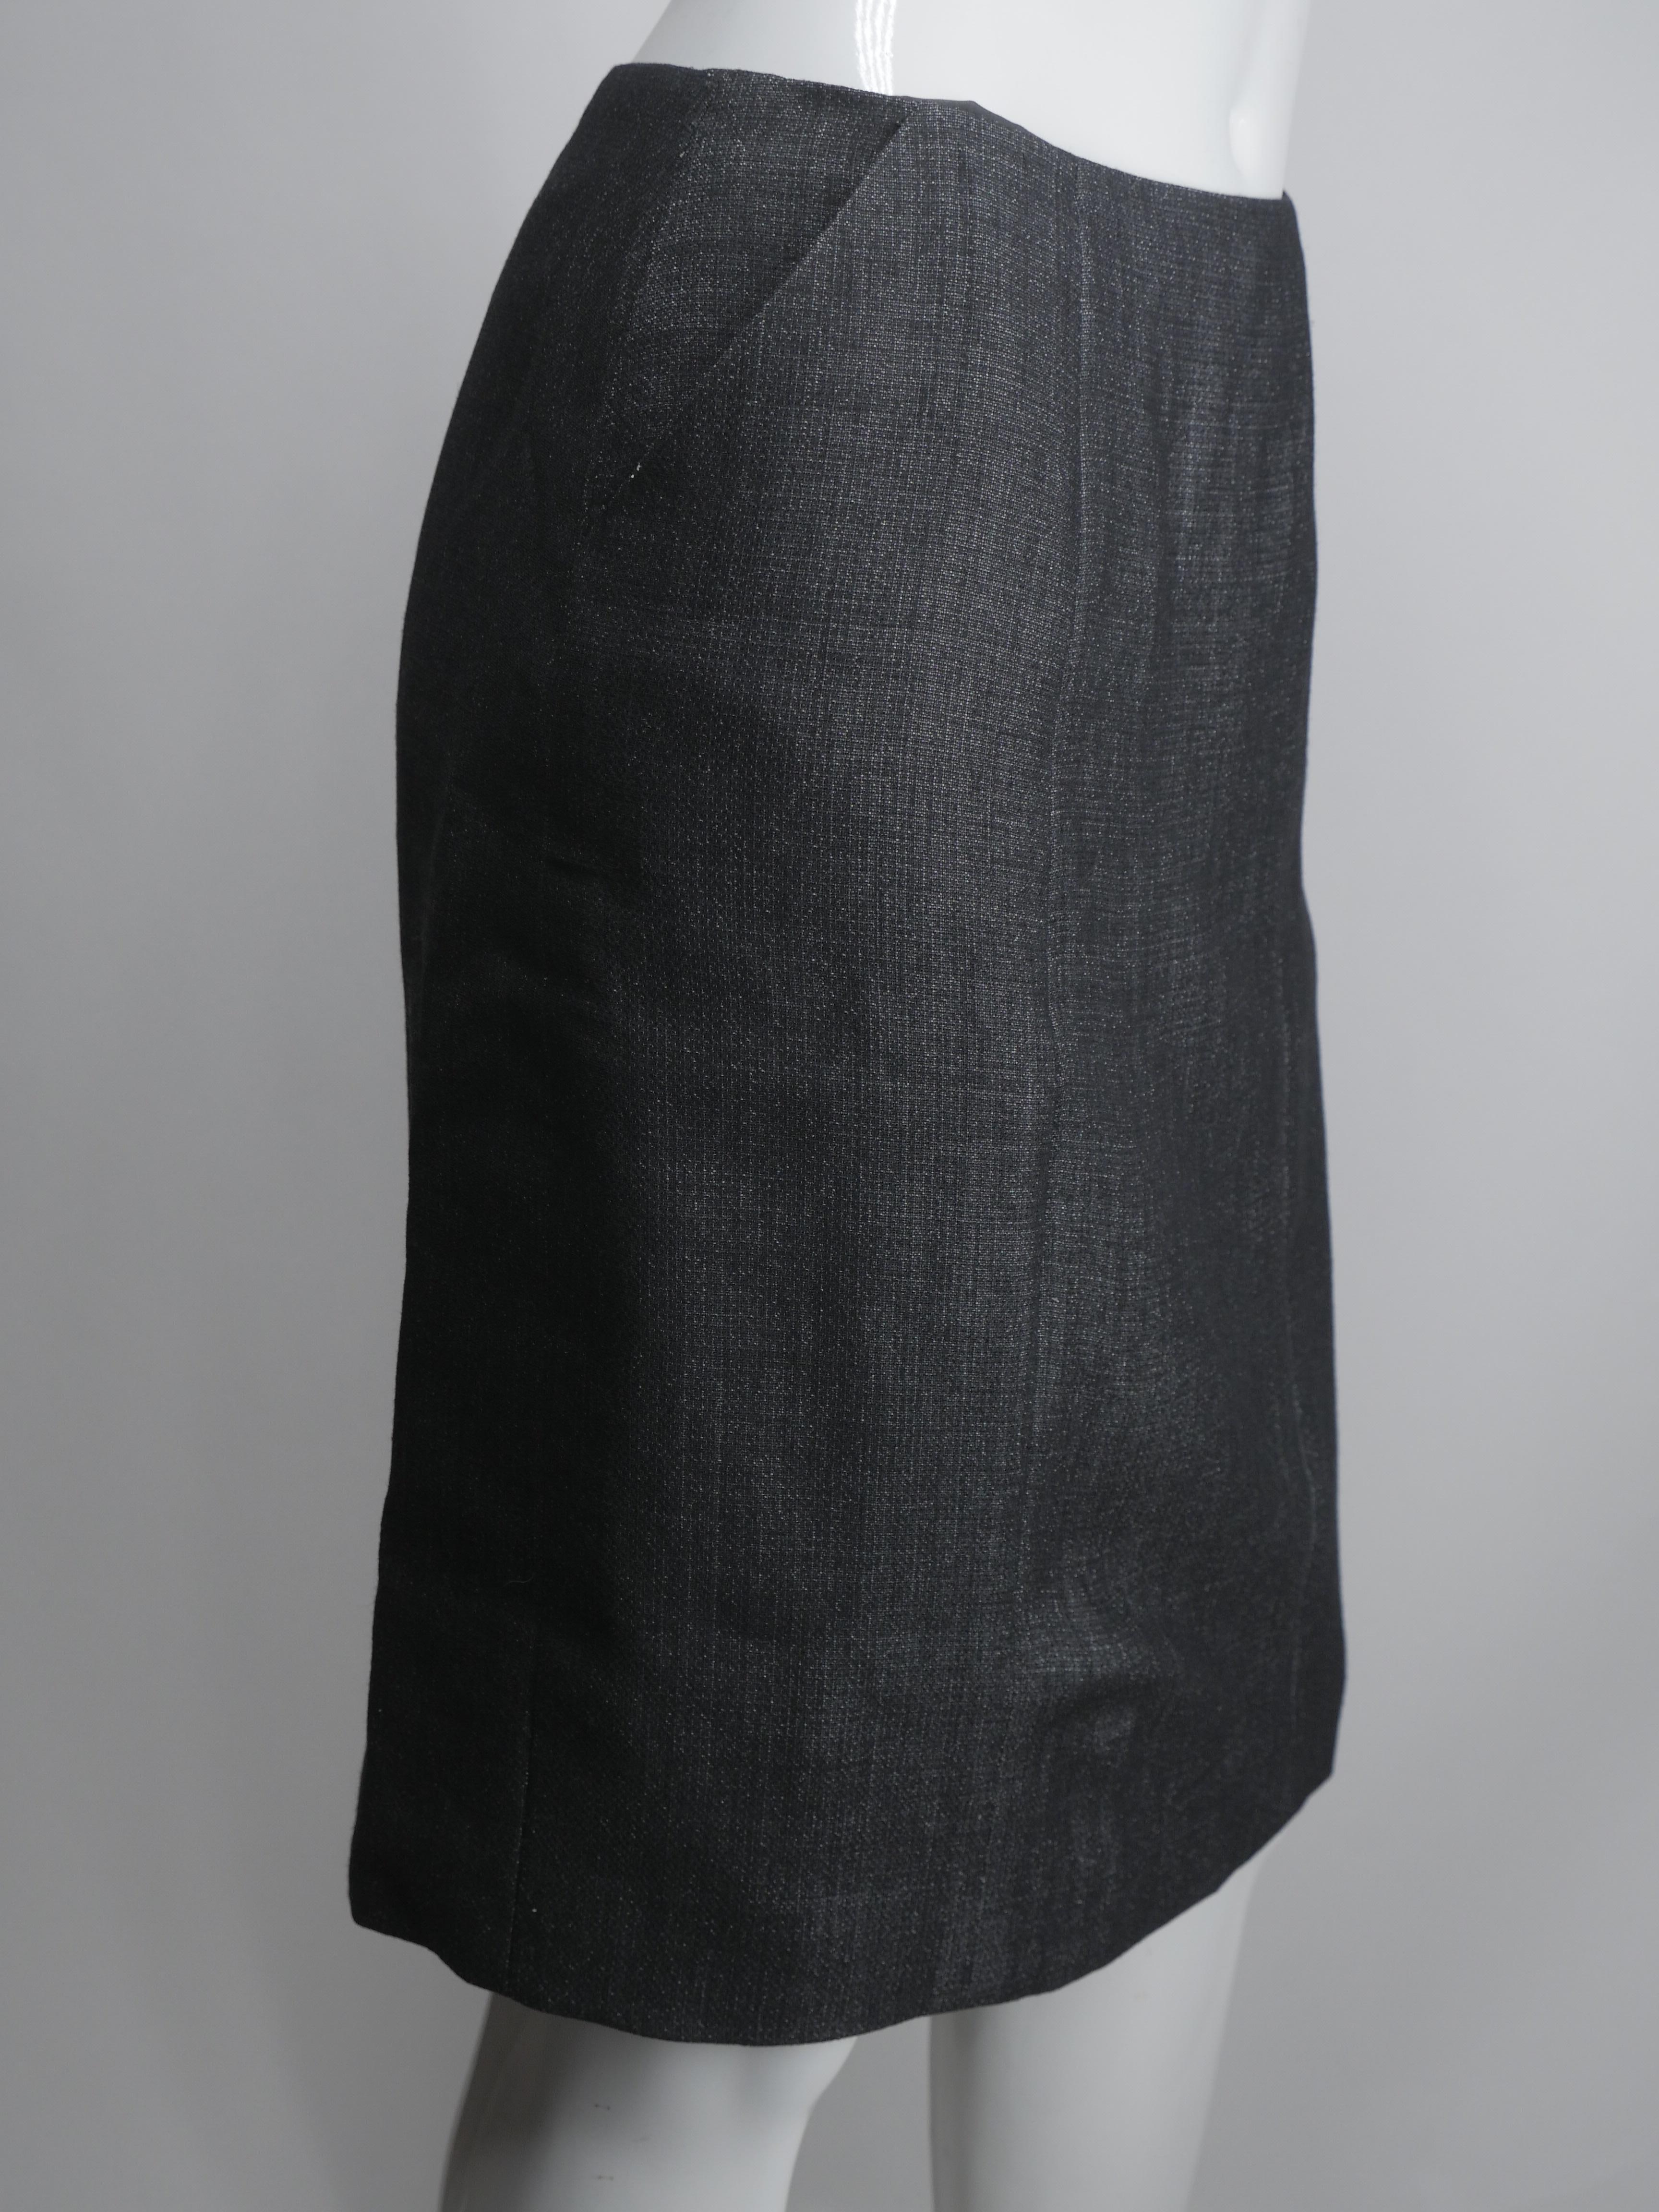 Chanel Size 38 99A Black Metallic Skirt Suit 6